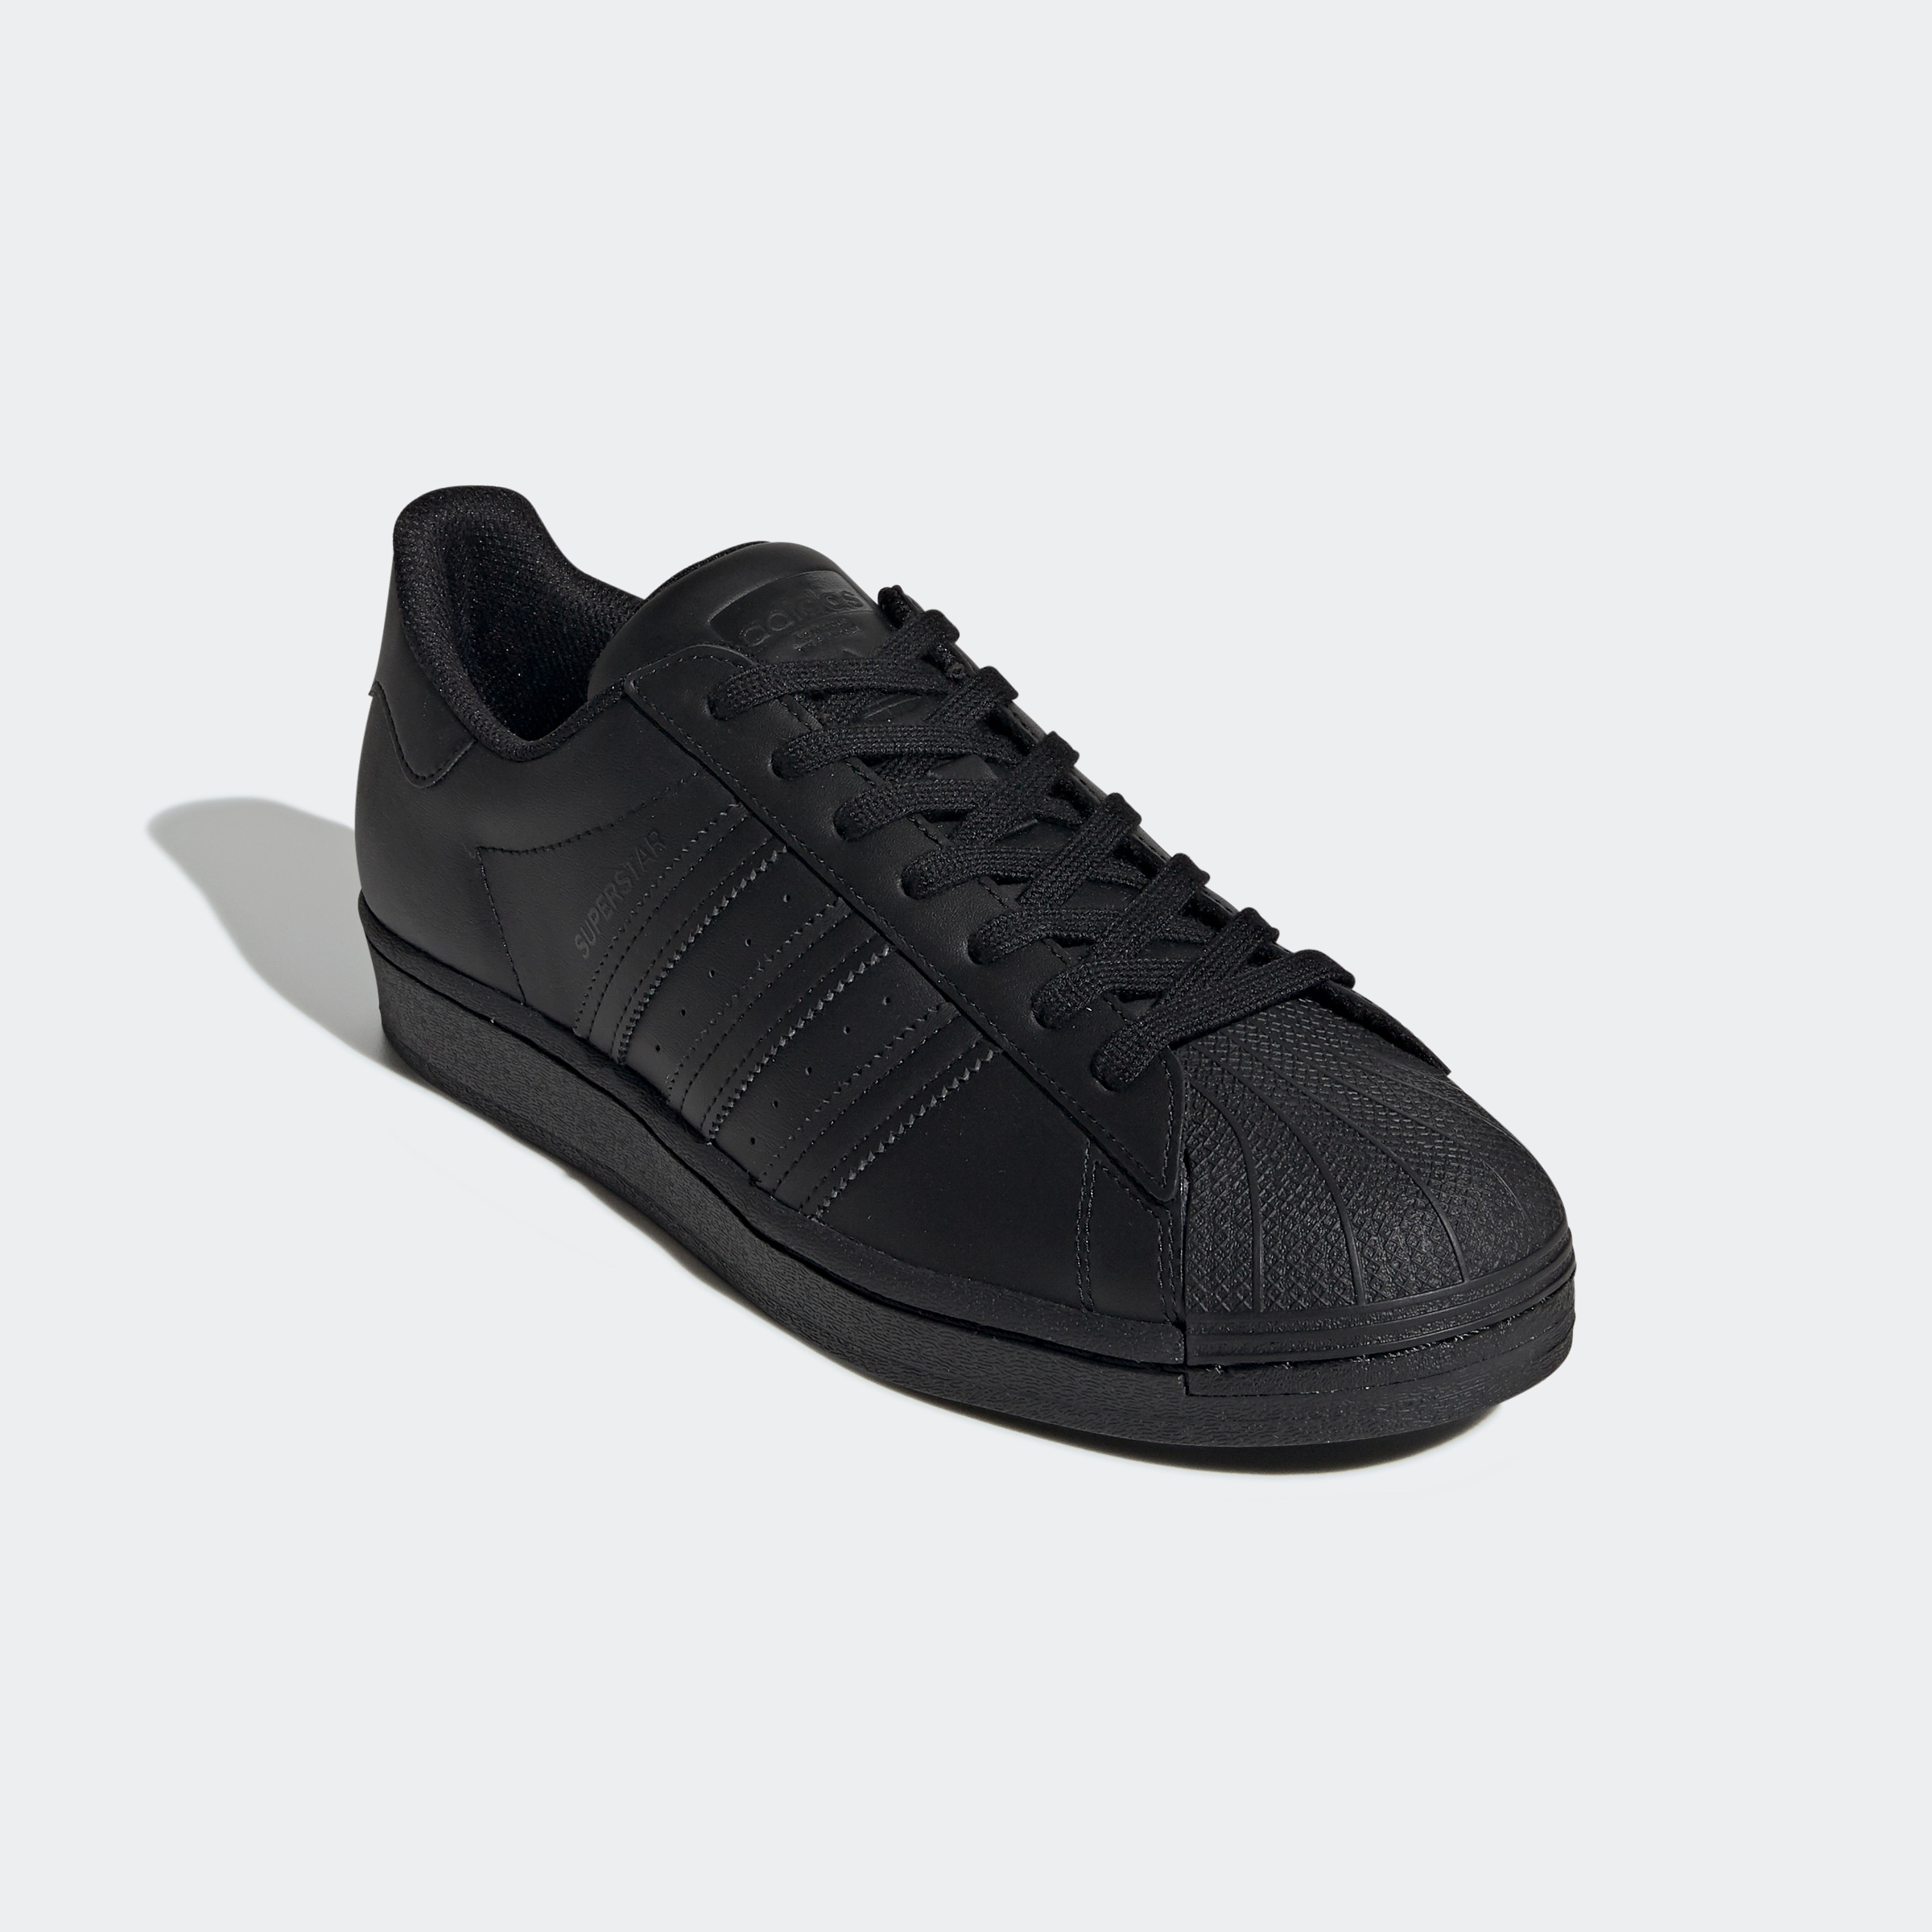 adidas Herren Superstar Sneaker, Core Black/Core Black/Core Black, 46 EU